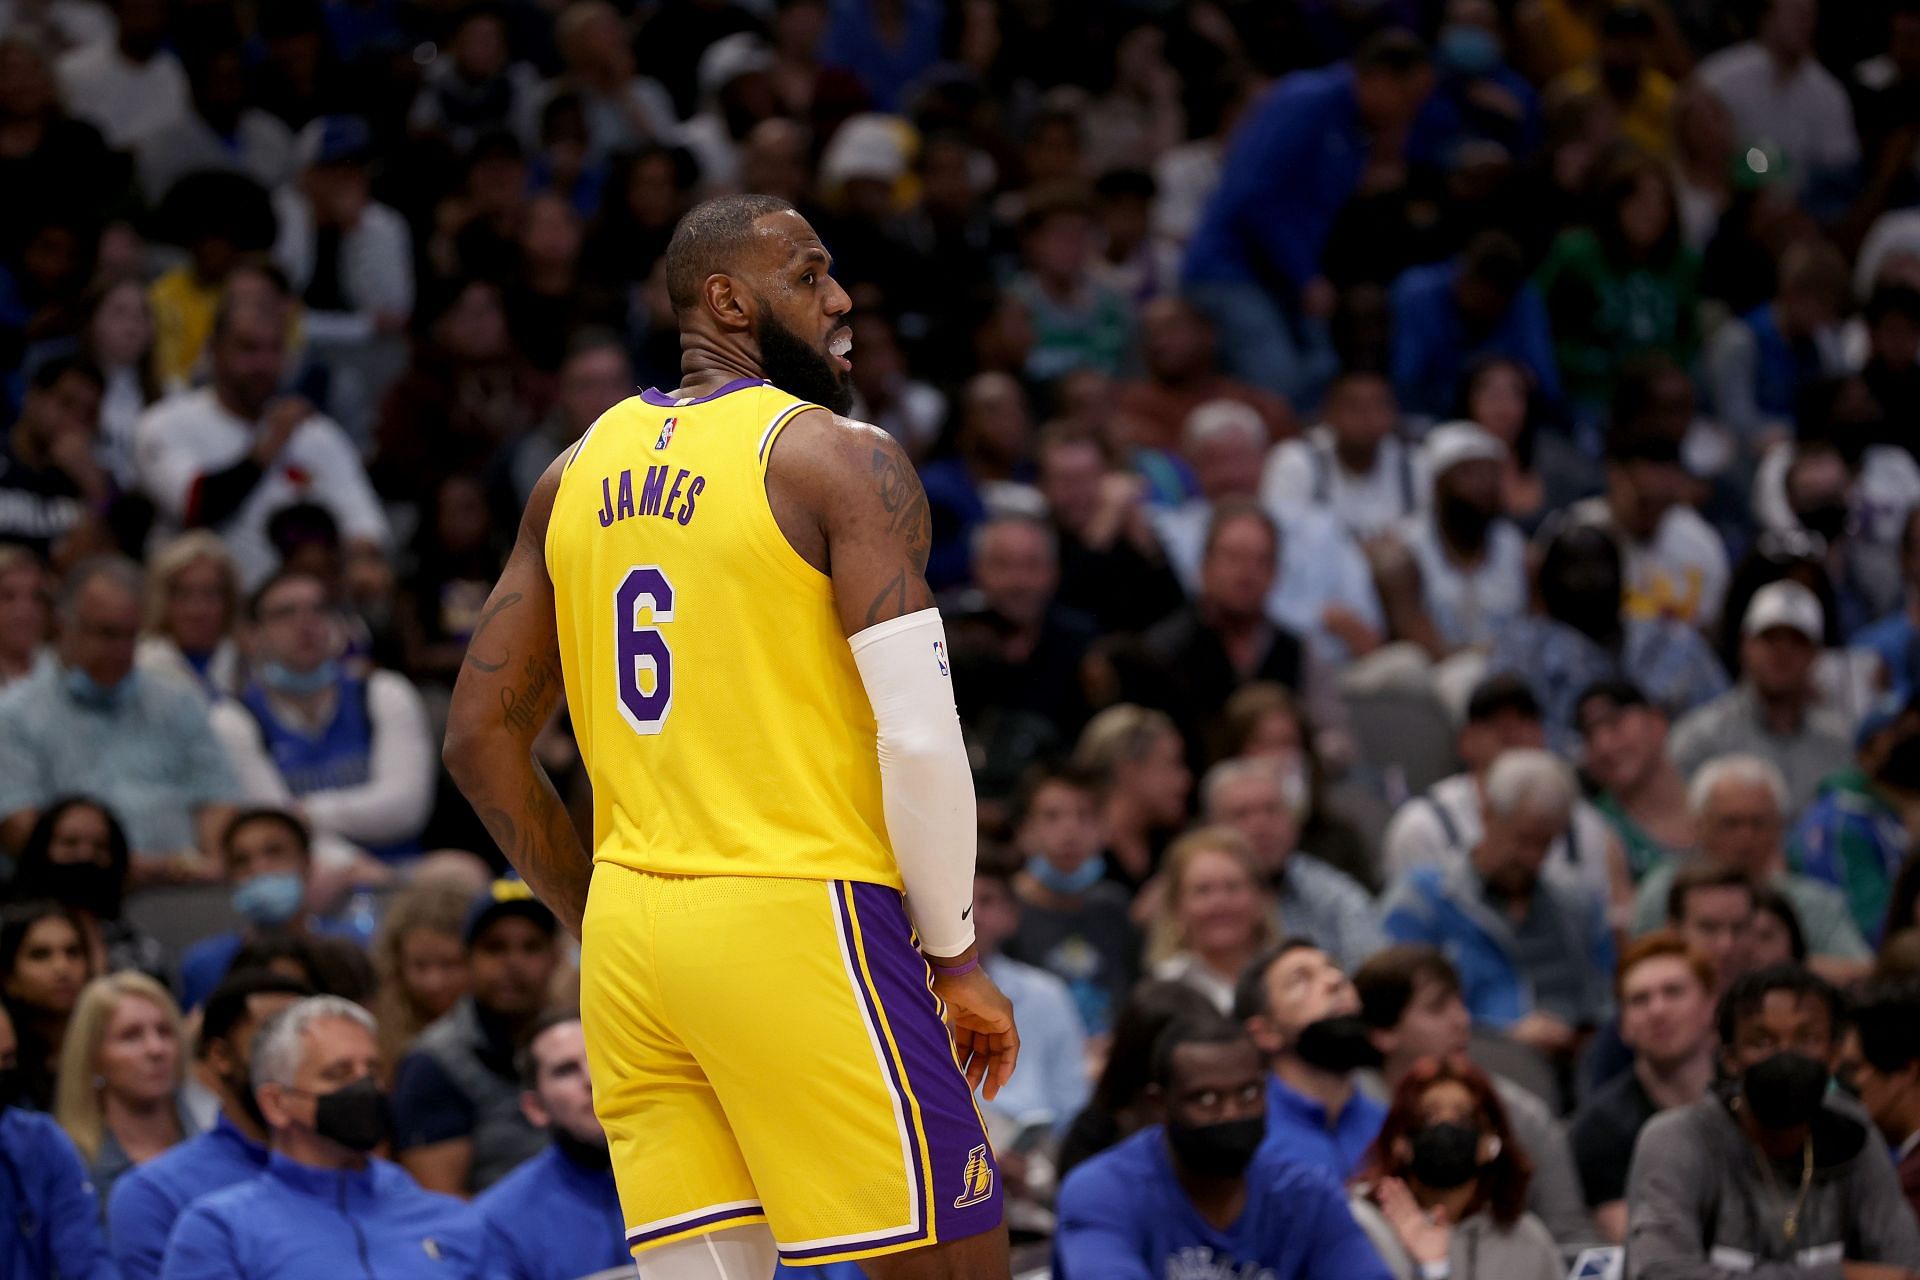 Los Angeles Lakers superstar forward LeBron James